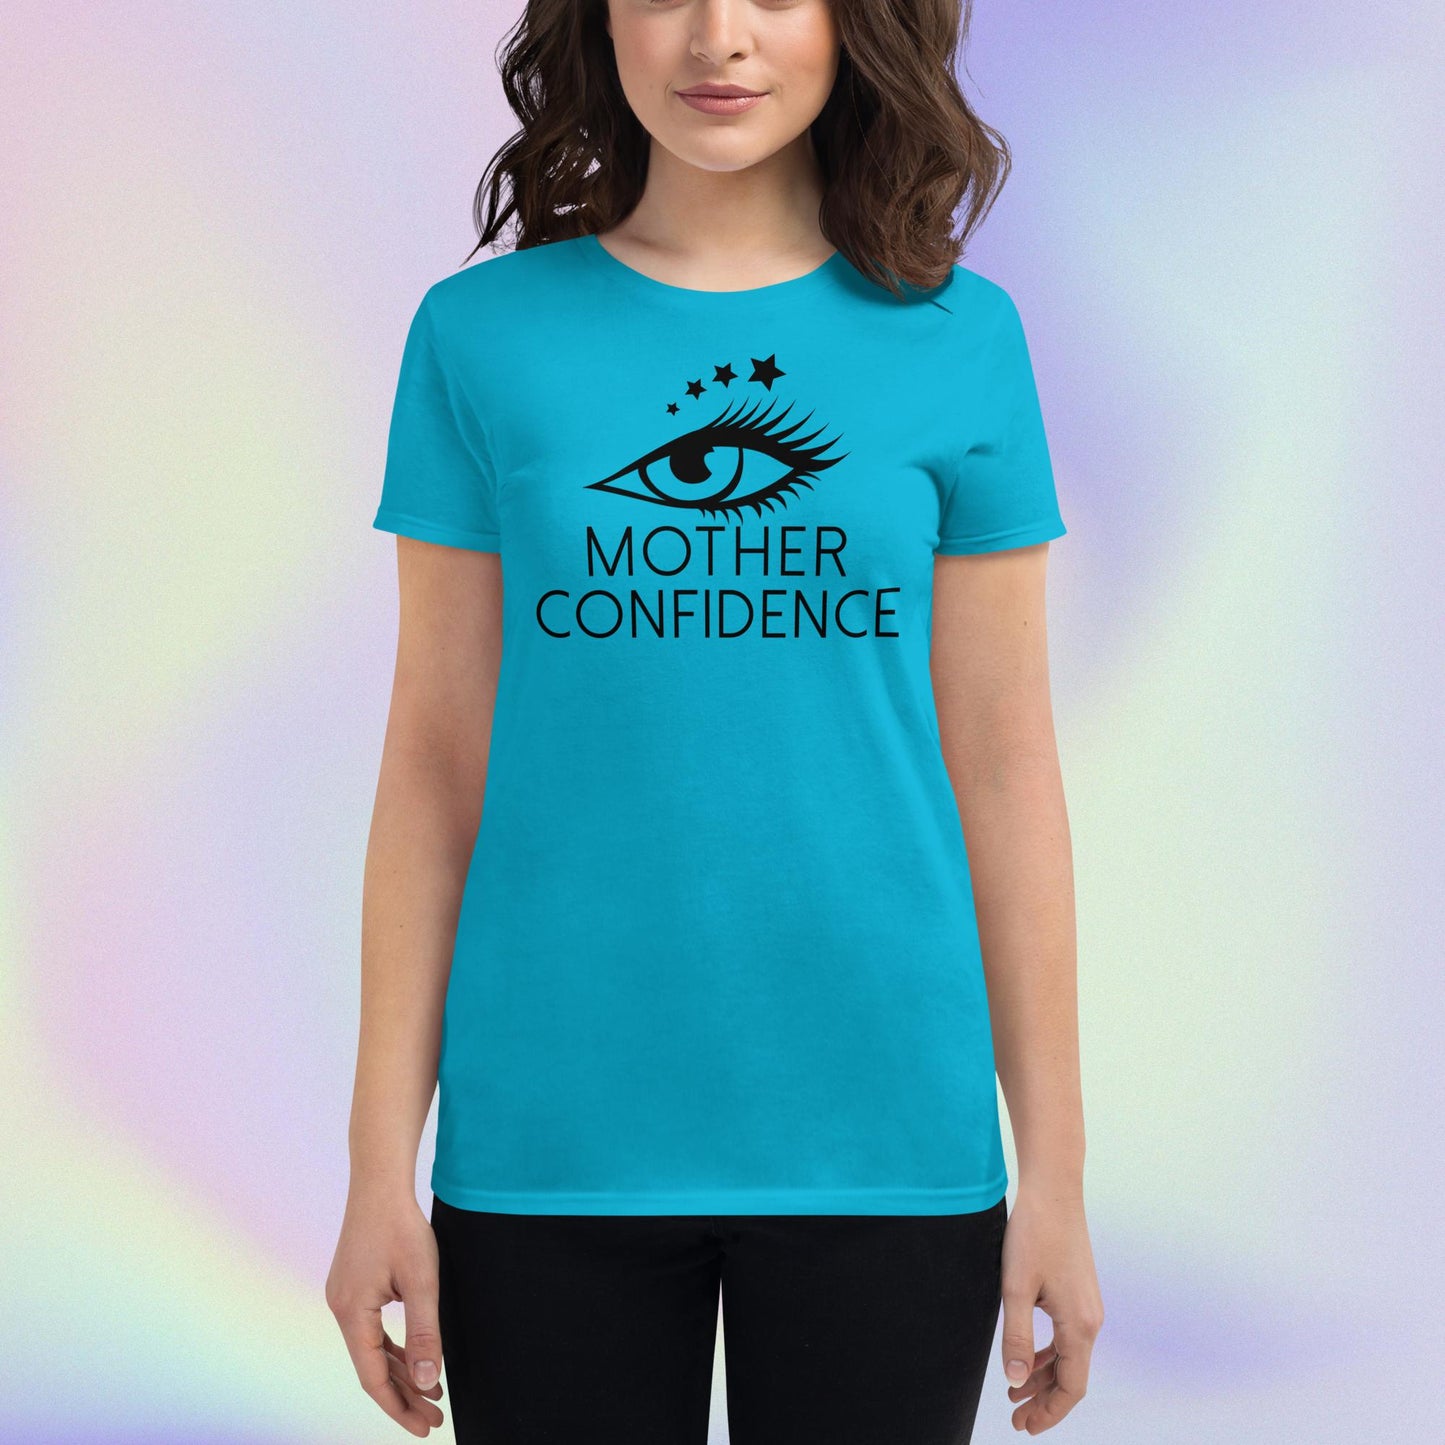 Celebration Mindset Exclusive: Mother Confidence. Women's short sleeve t-shirt